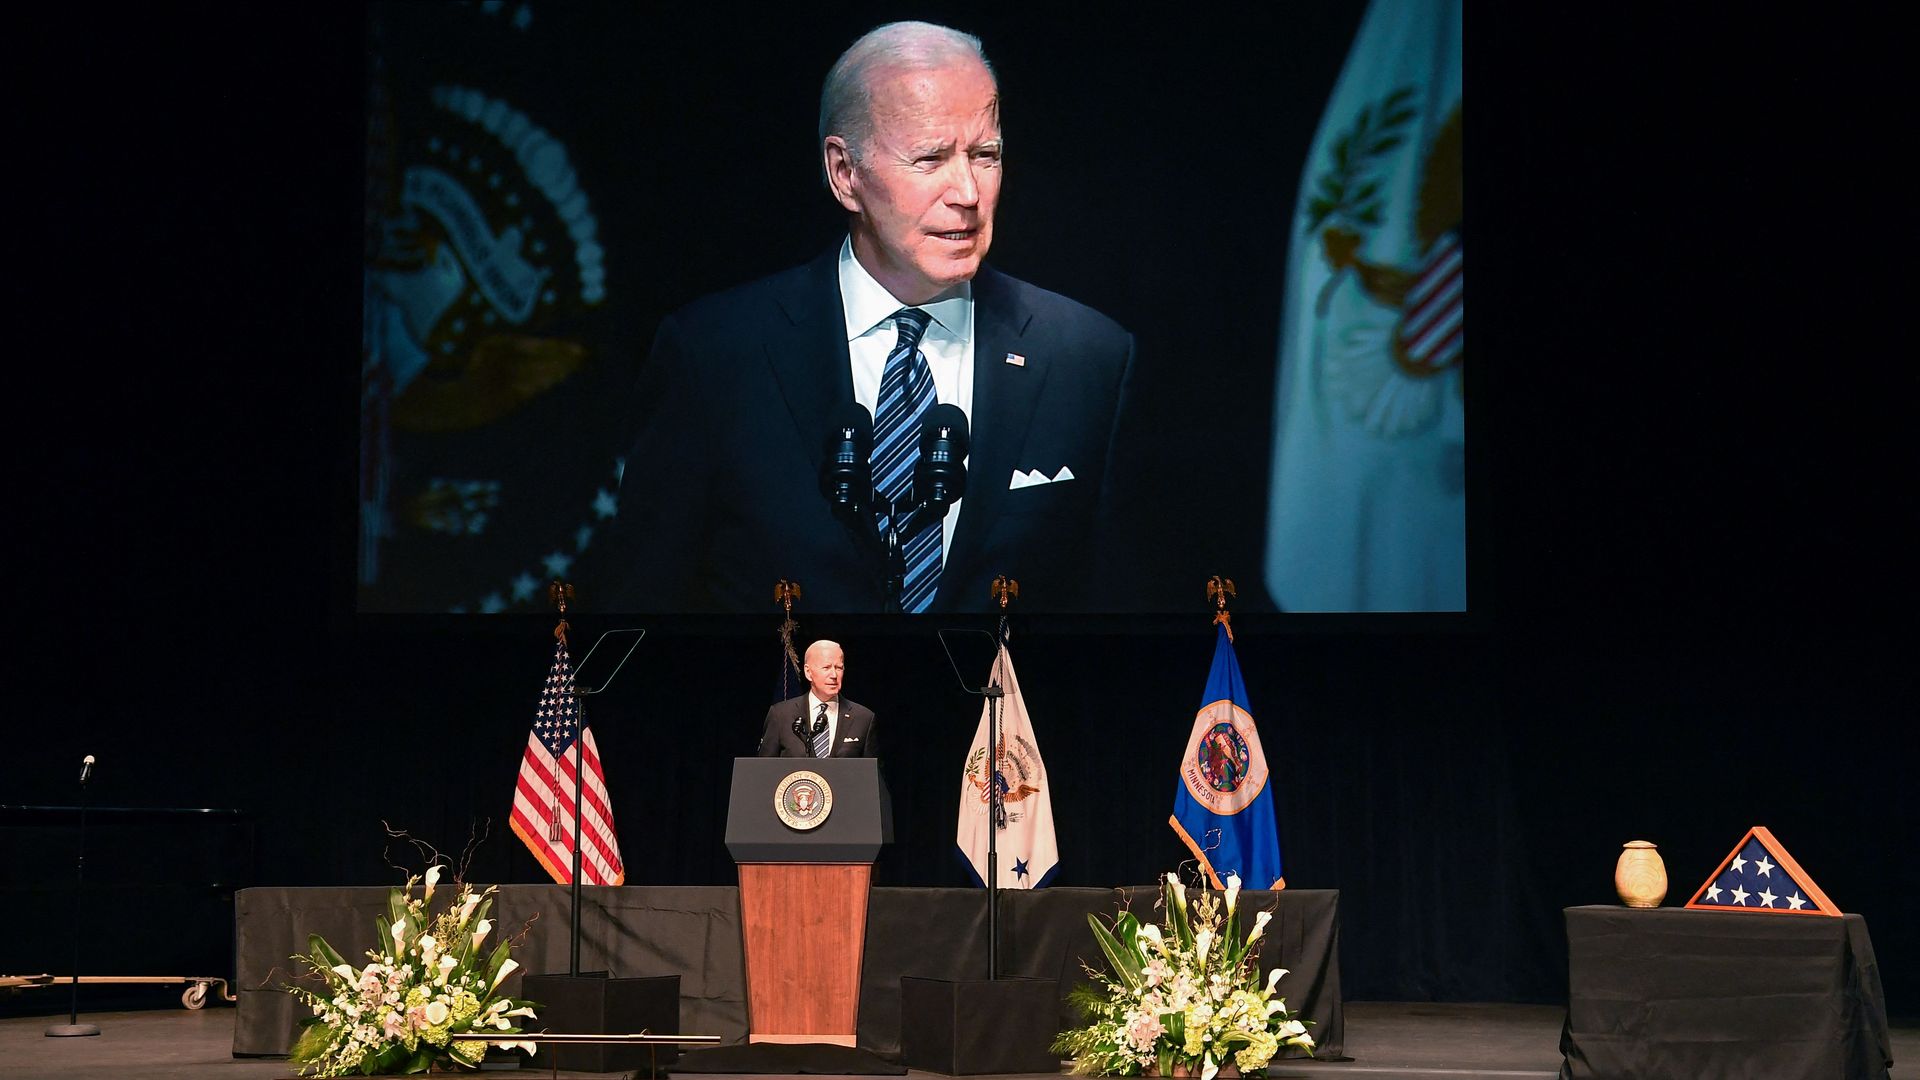 President Biden is seen speaking at the memorial service for former Vice President Walter Mondale.